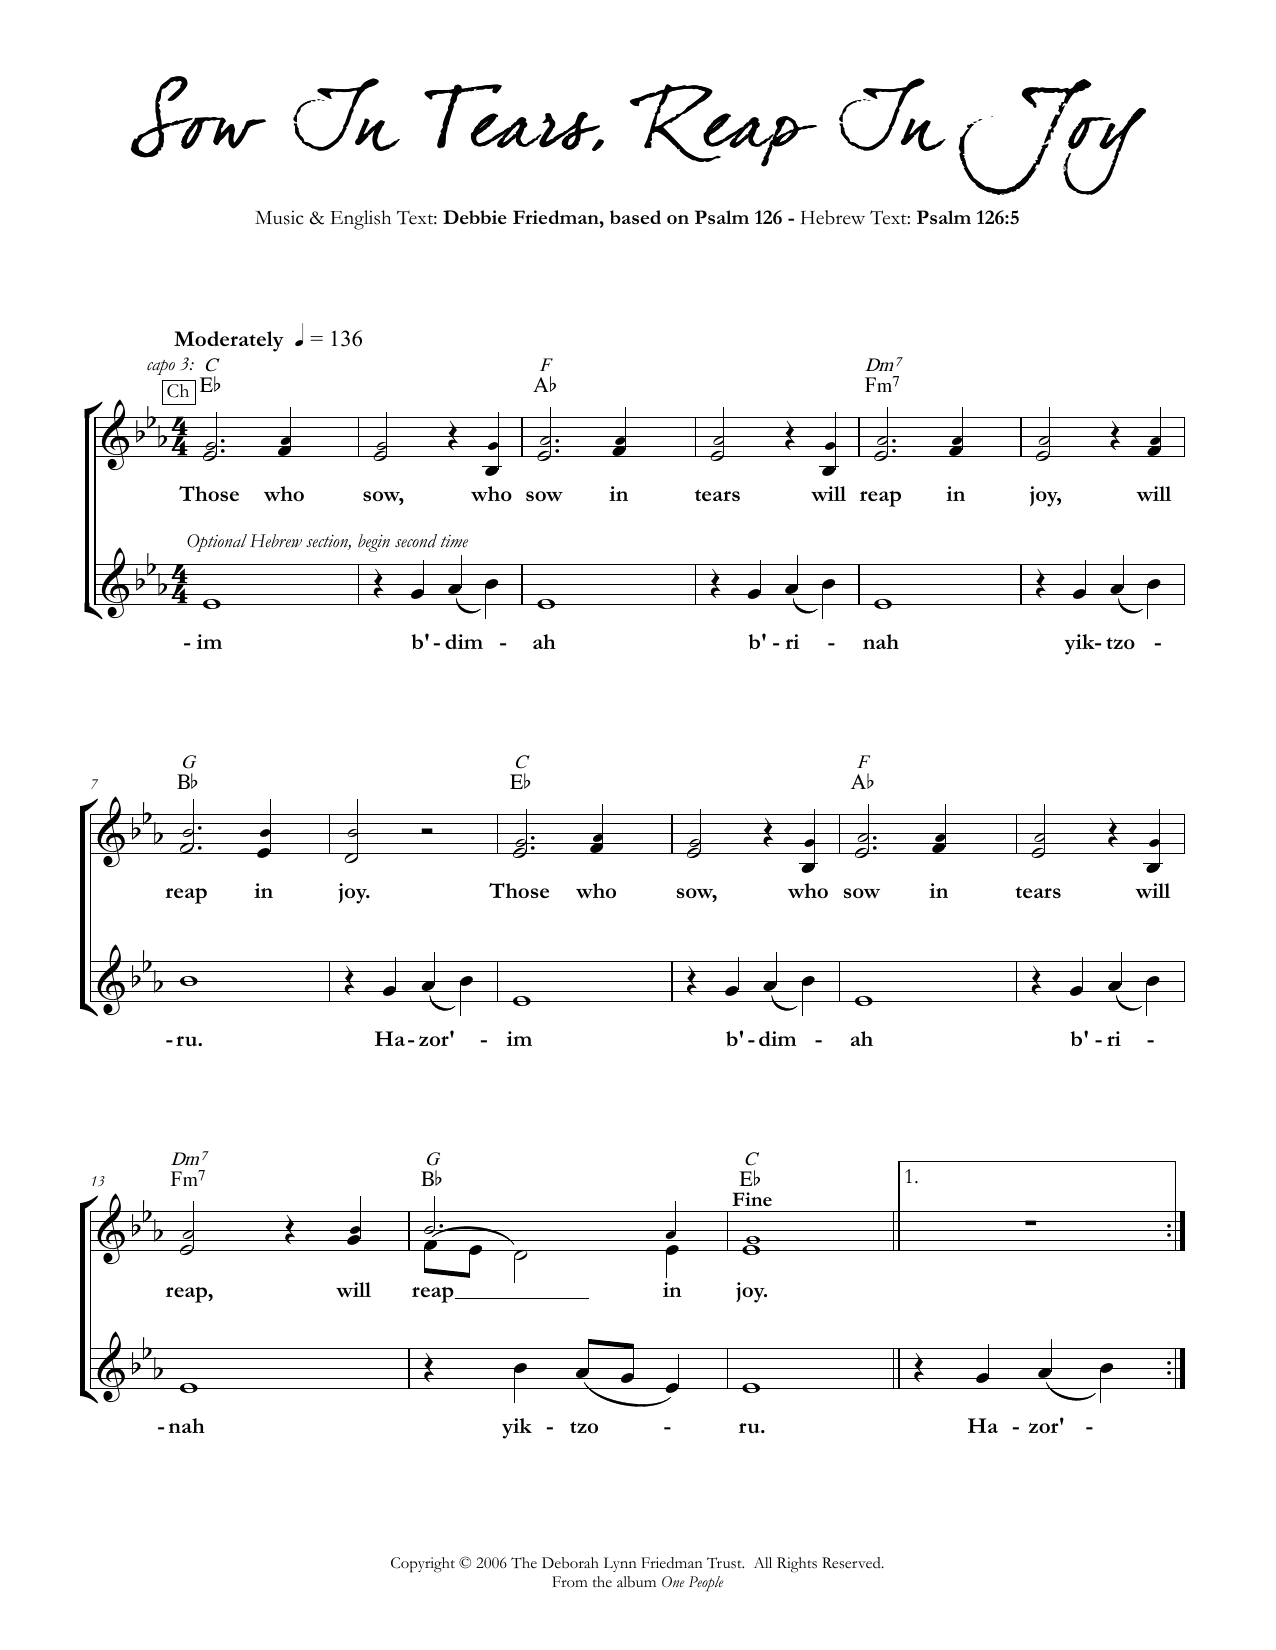 Download Debbie Friedman Sow In Tears, Reap In Joy Sheet Music and learn how to play Lead Sheet / Fake Book PDF digital score in minutes